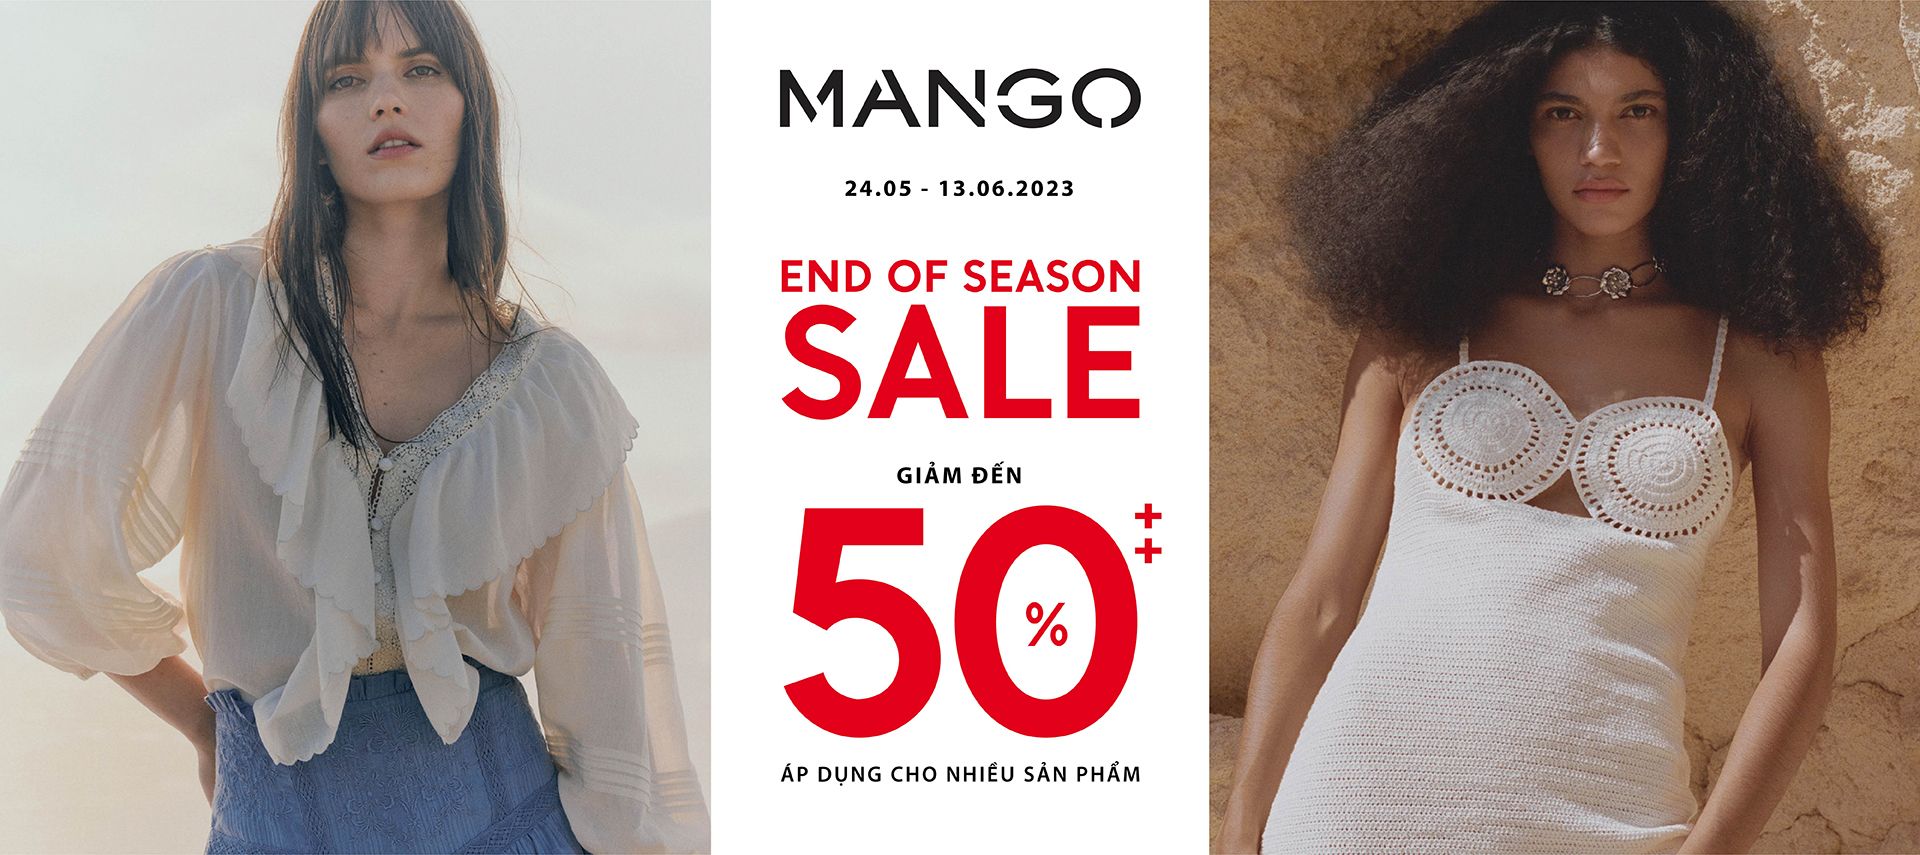 MANGO - END OF SEASON SALE - UP TO 50%++